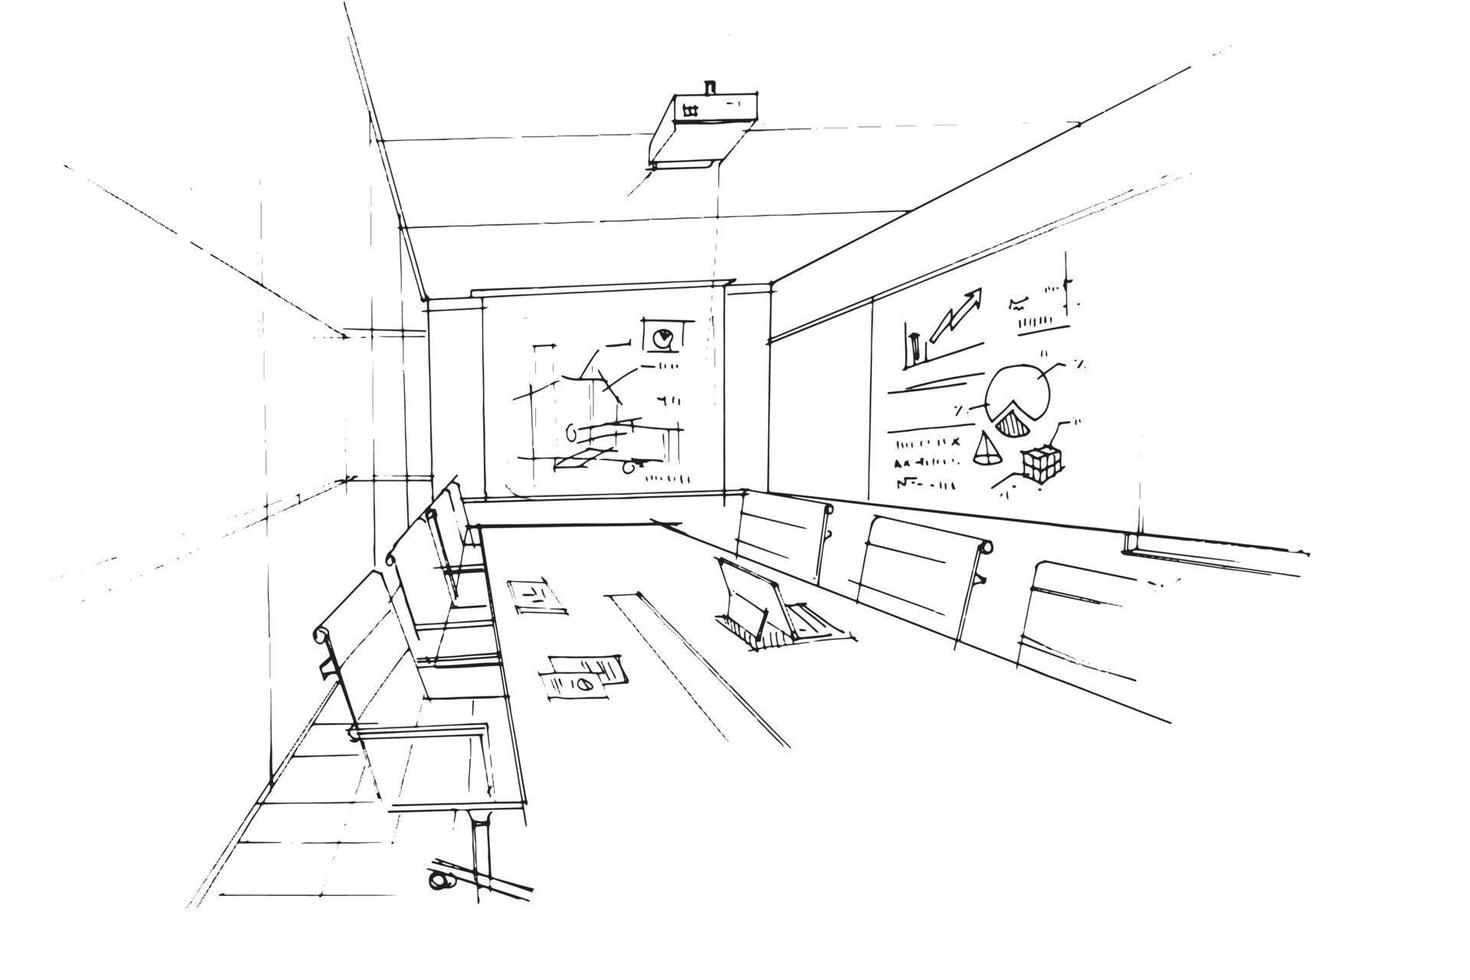 Interior Design big Office Room with desks custom Drawing Stock Photo   Alamy